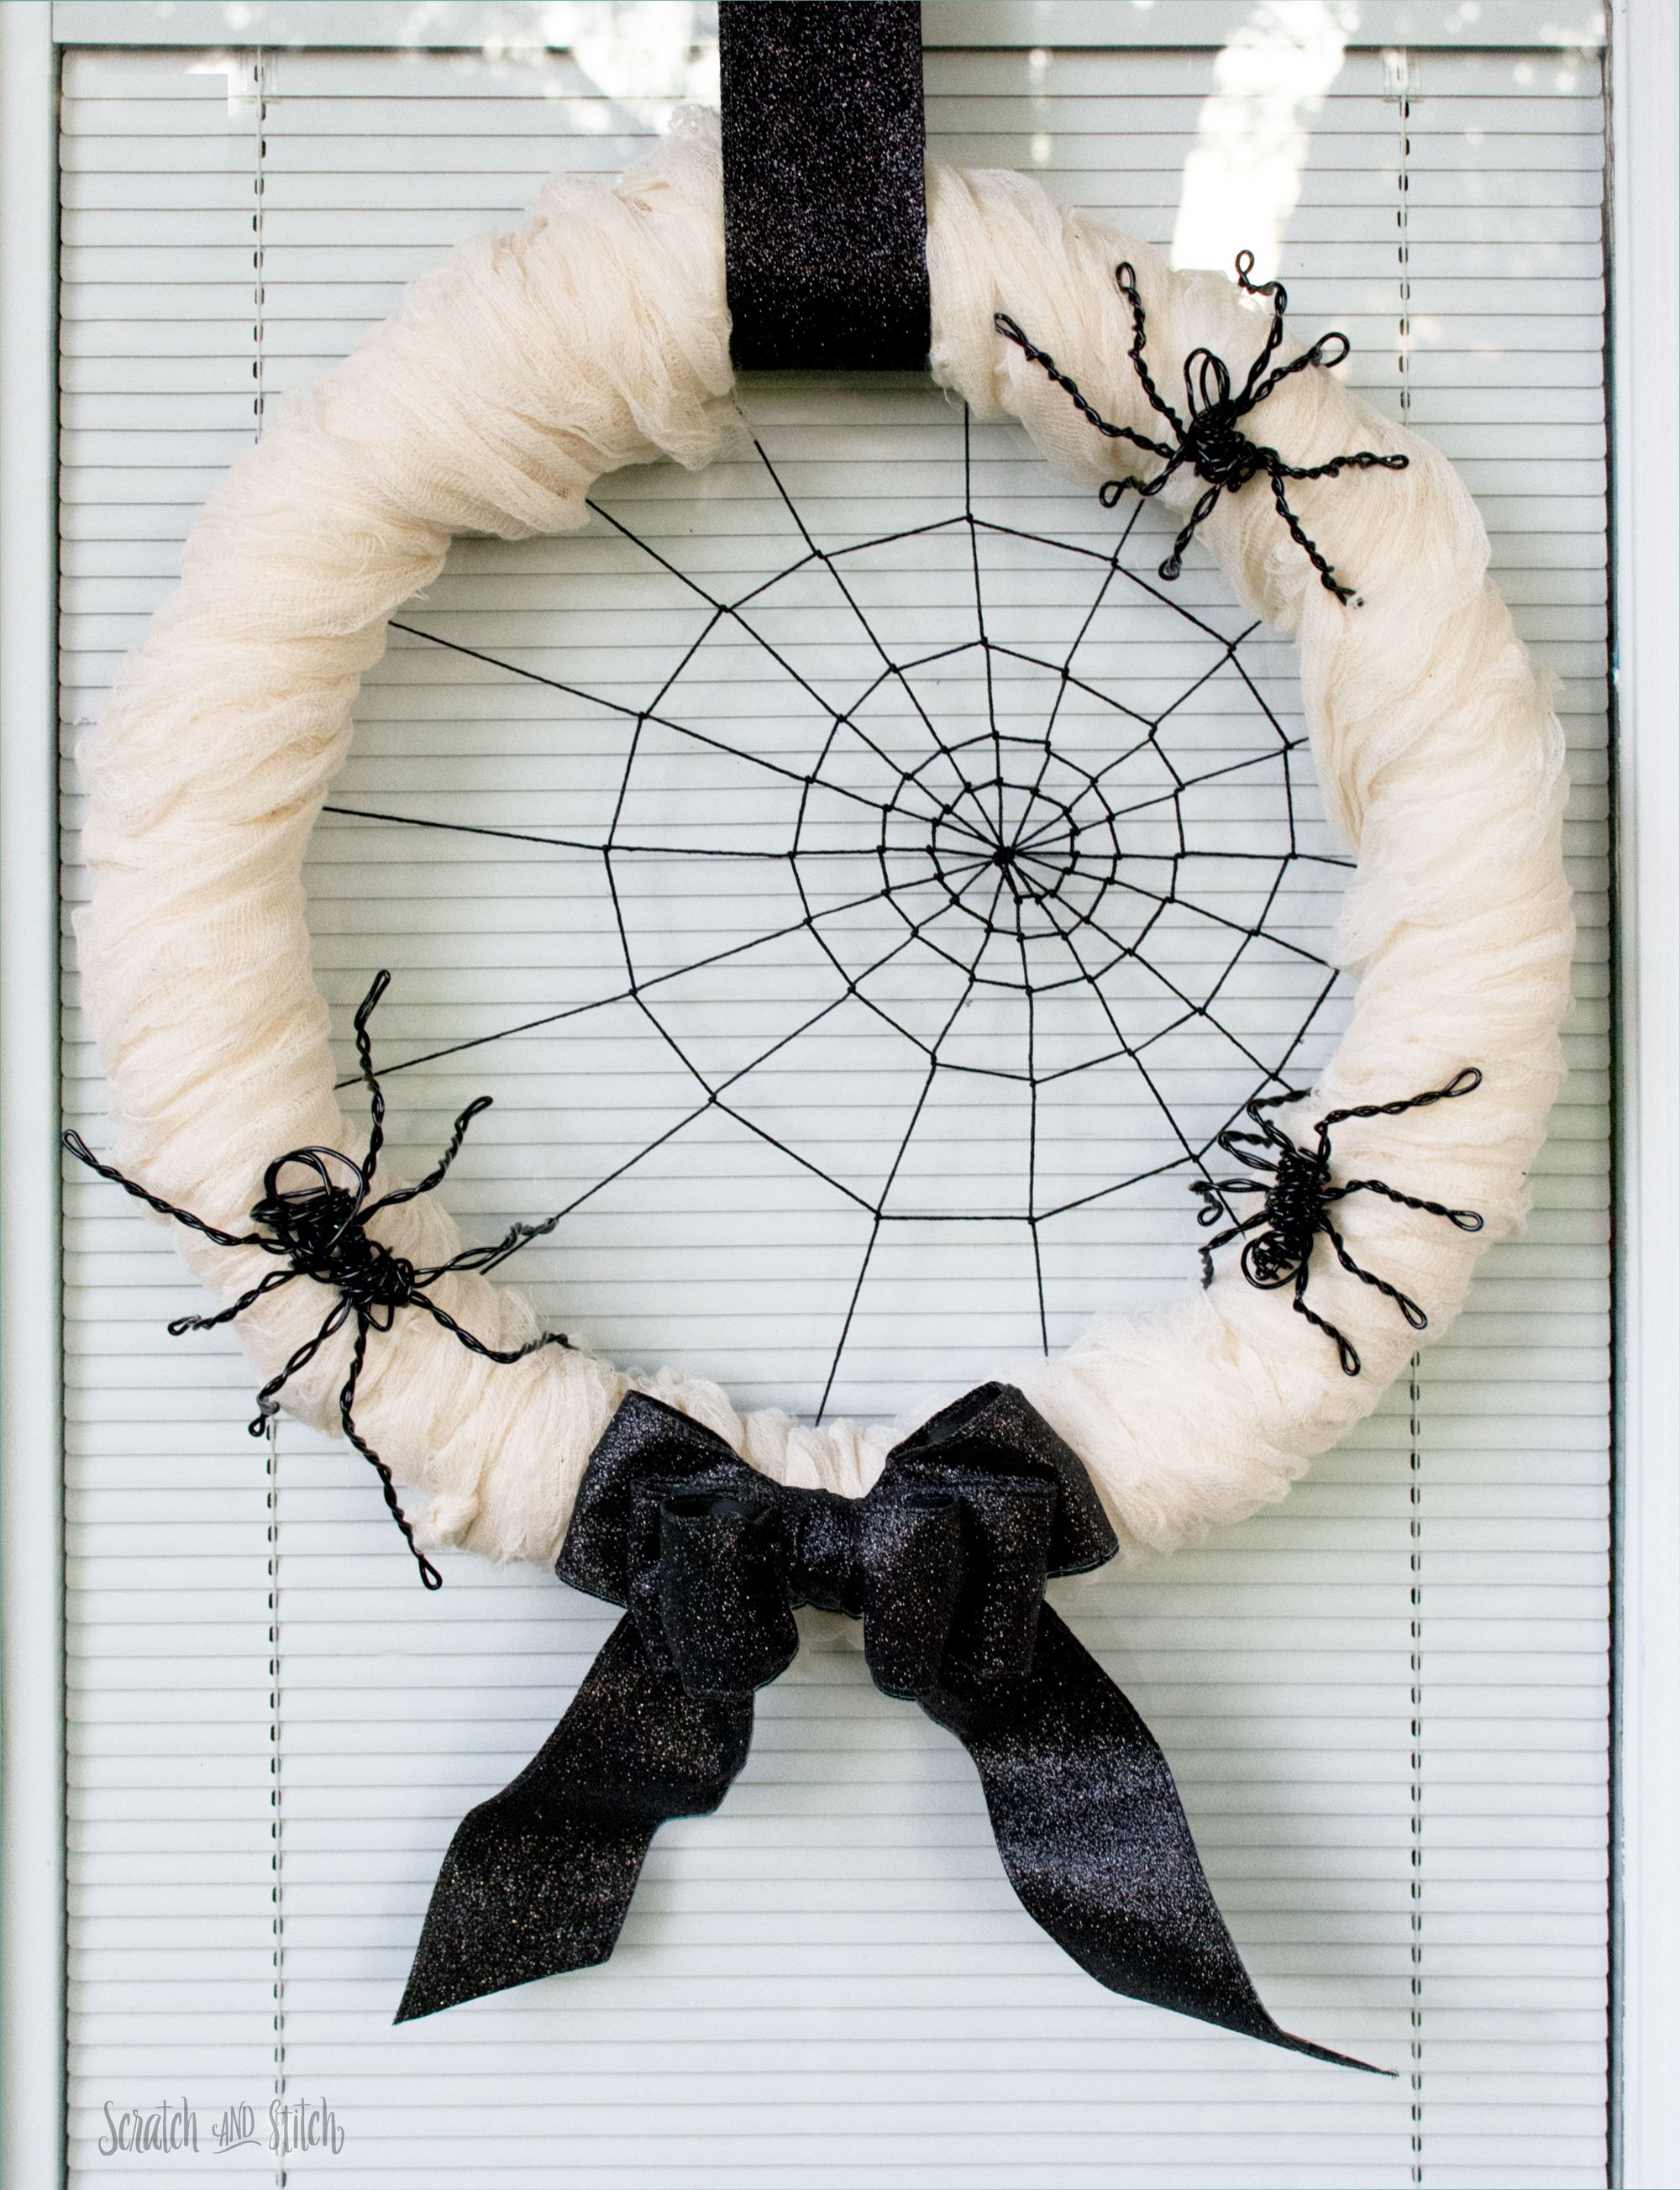 DIY Spiderweb Halloween Wreath with Wire Spiders